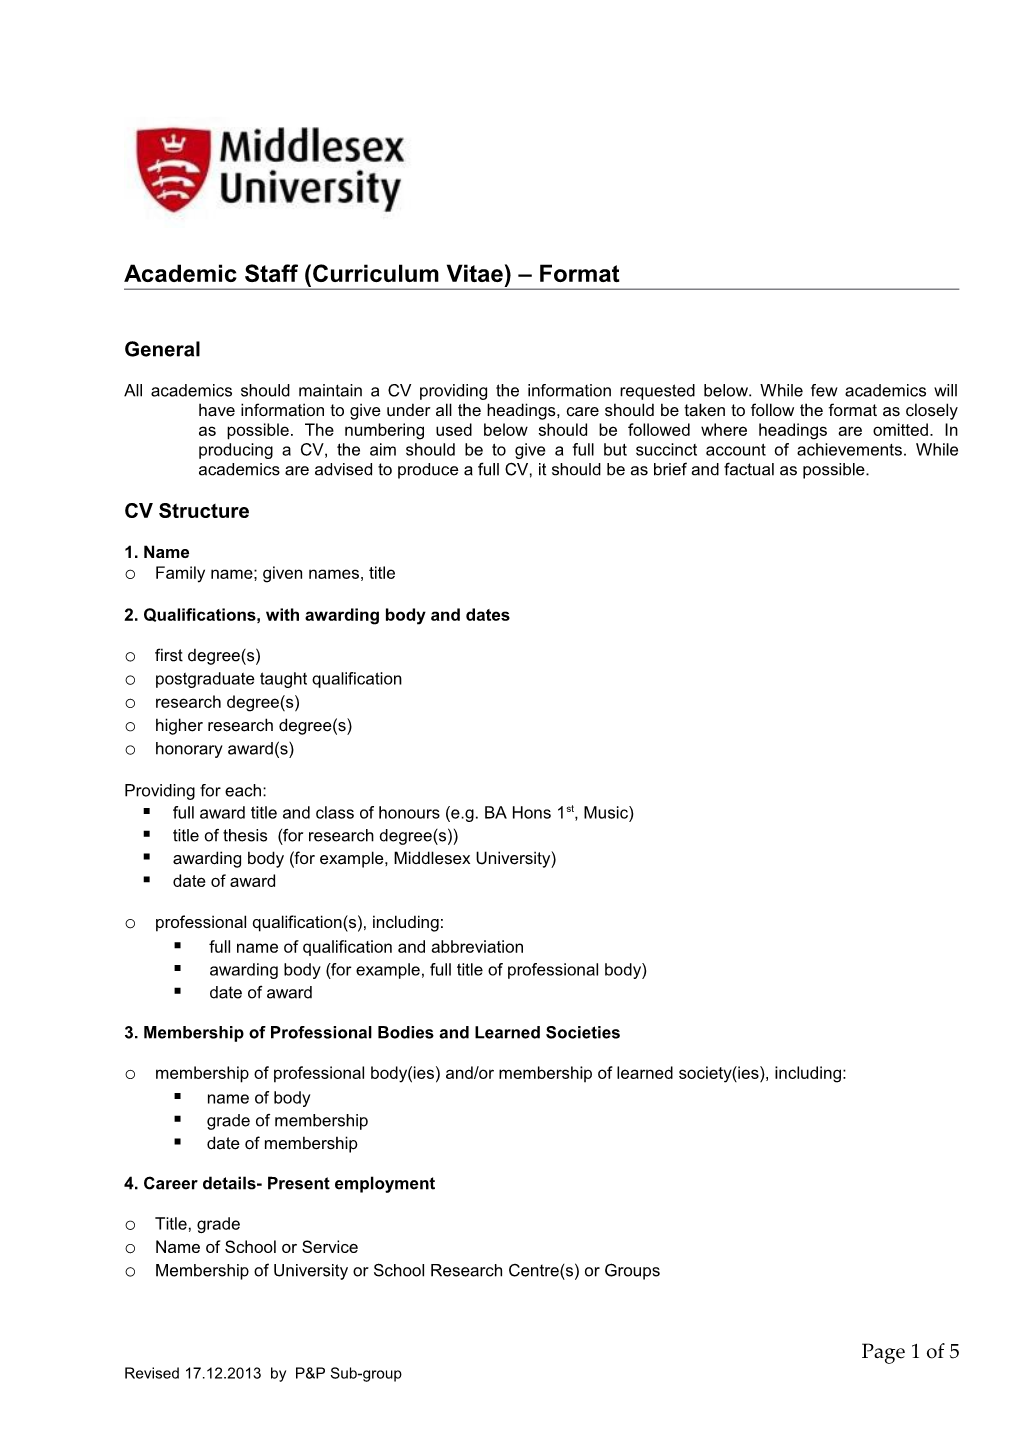 Staff (Curriculum Vitae) Database: Draft Specification